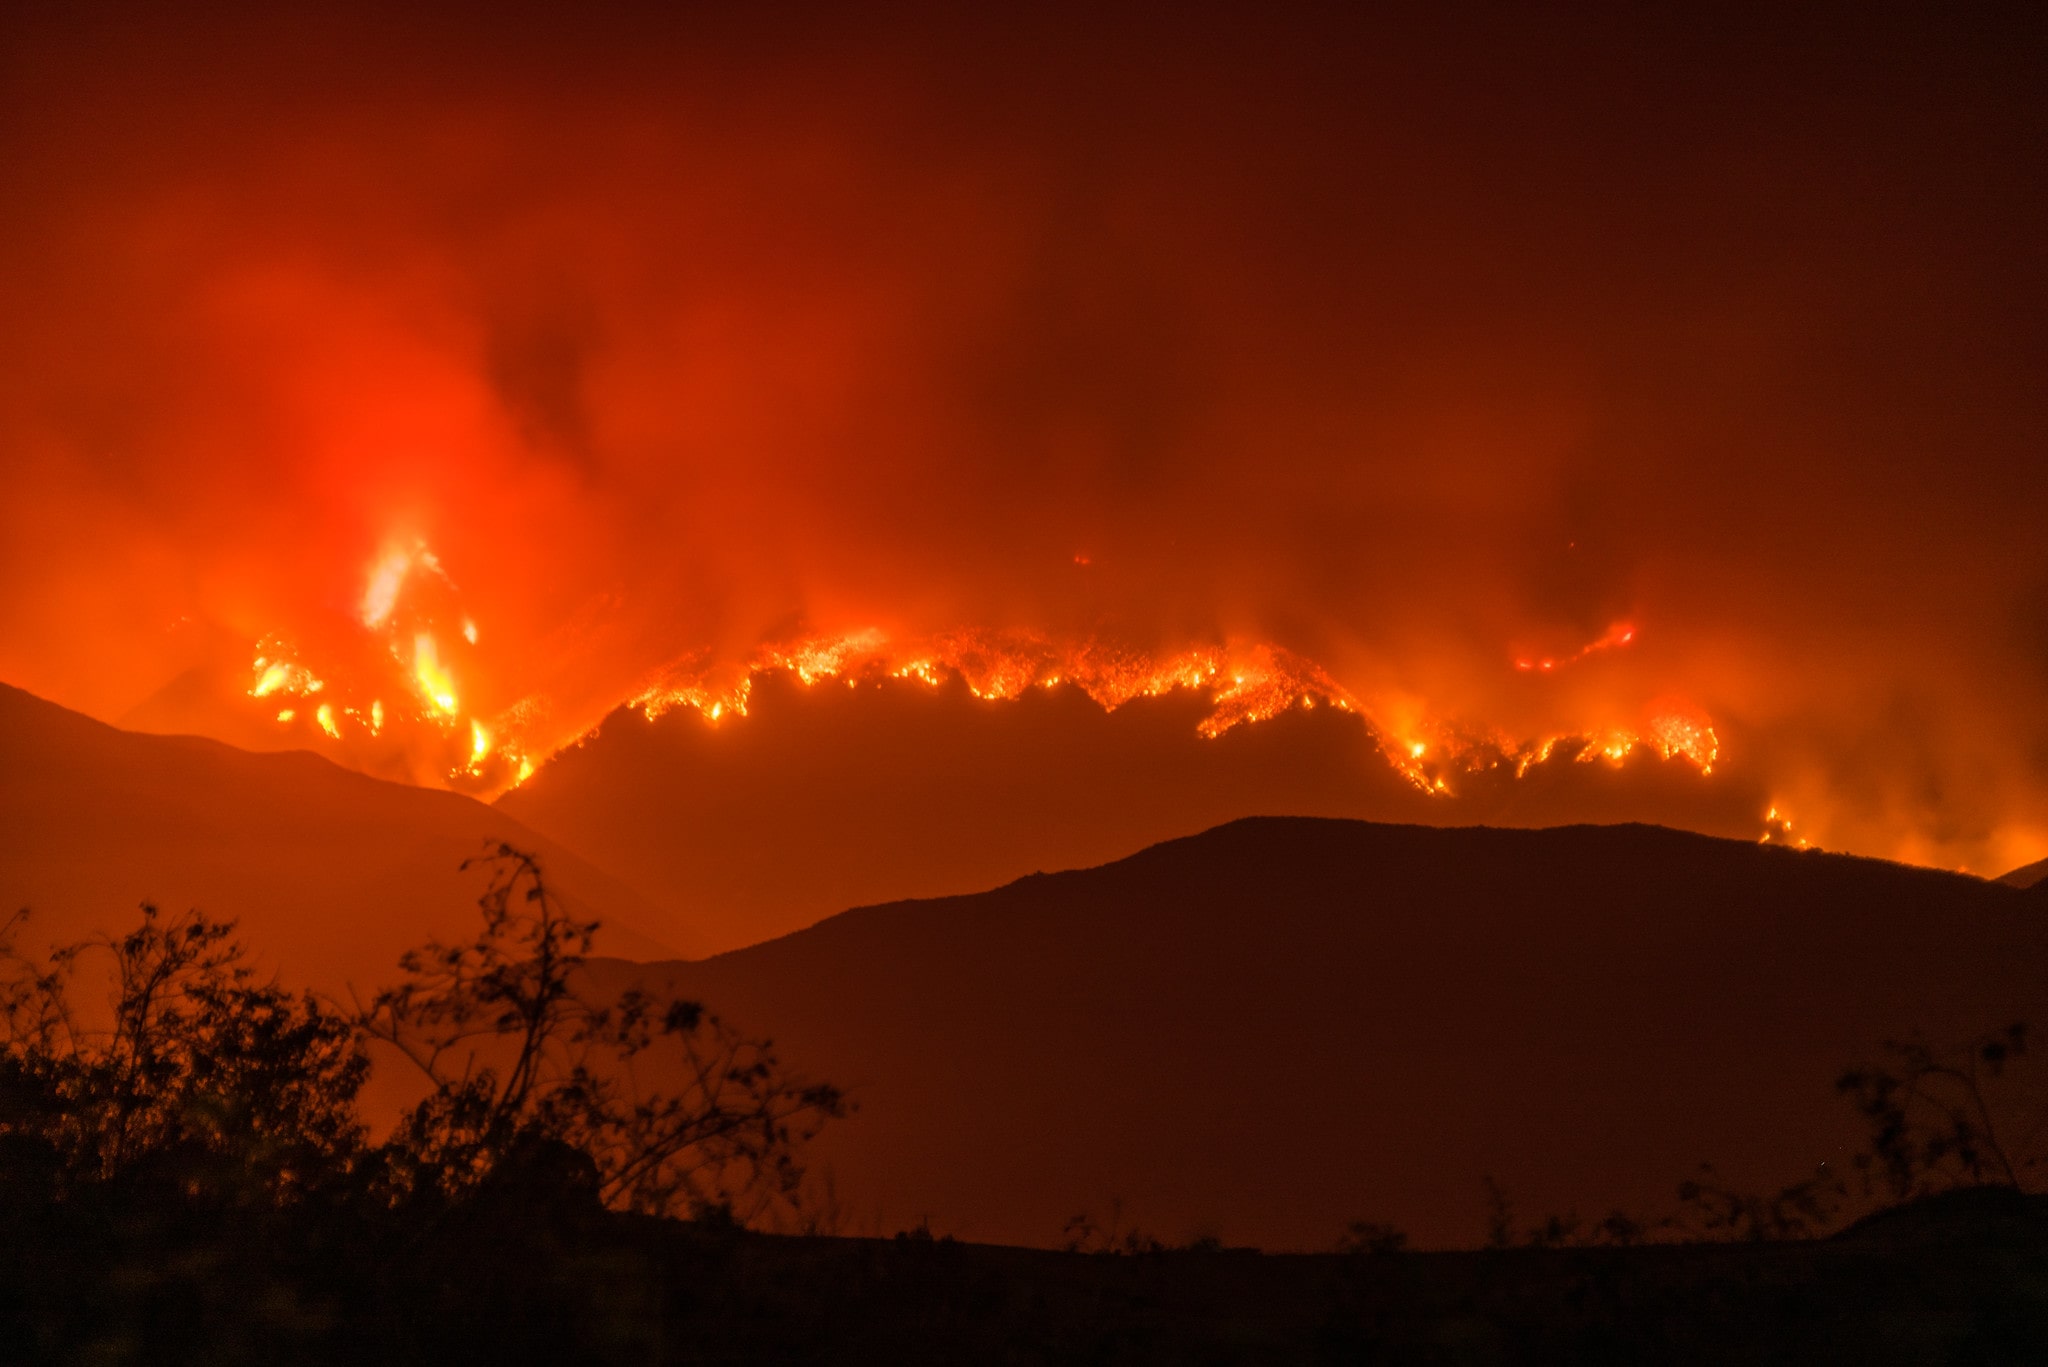 Africa hit hardest as wildfires burn 4.23 m square kilometres per year